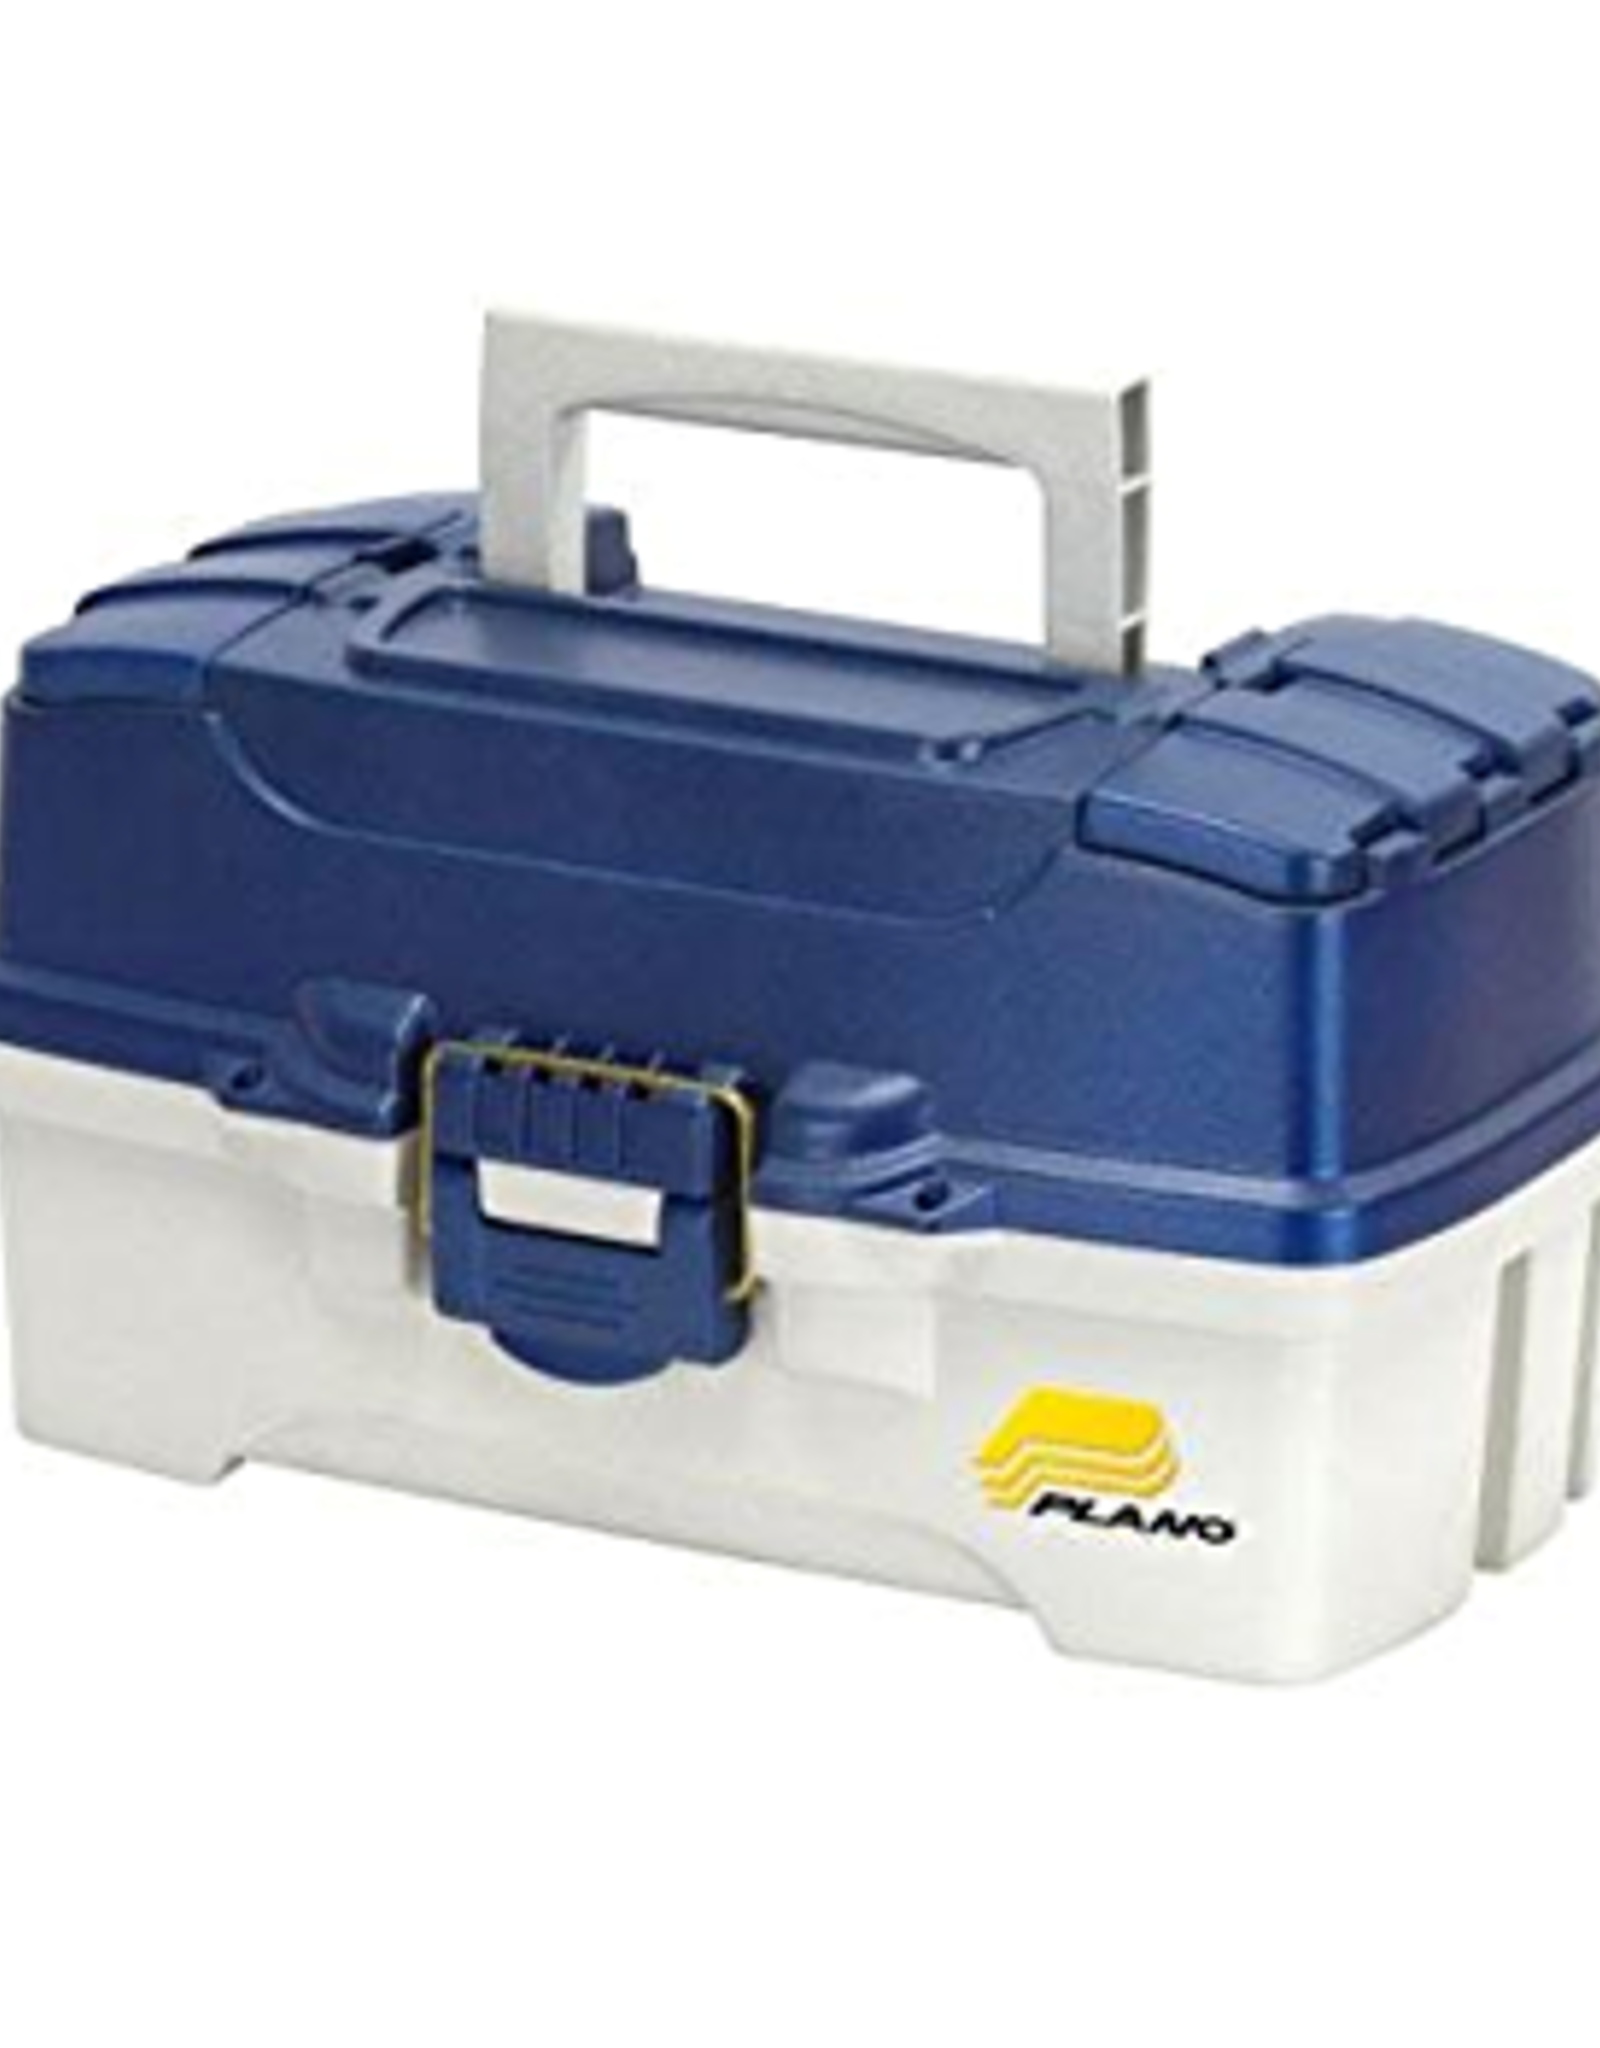 Plano 2 Tray Tackle Box w/ dual top access Blue Metallic/Off White